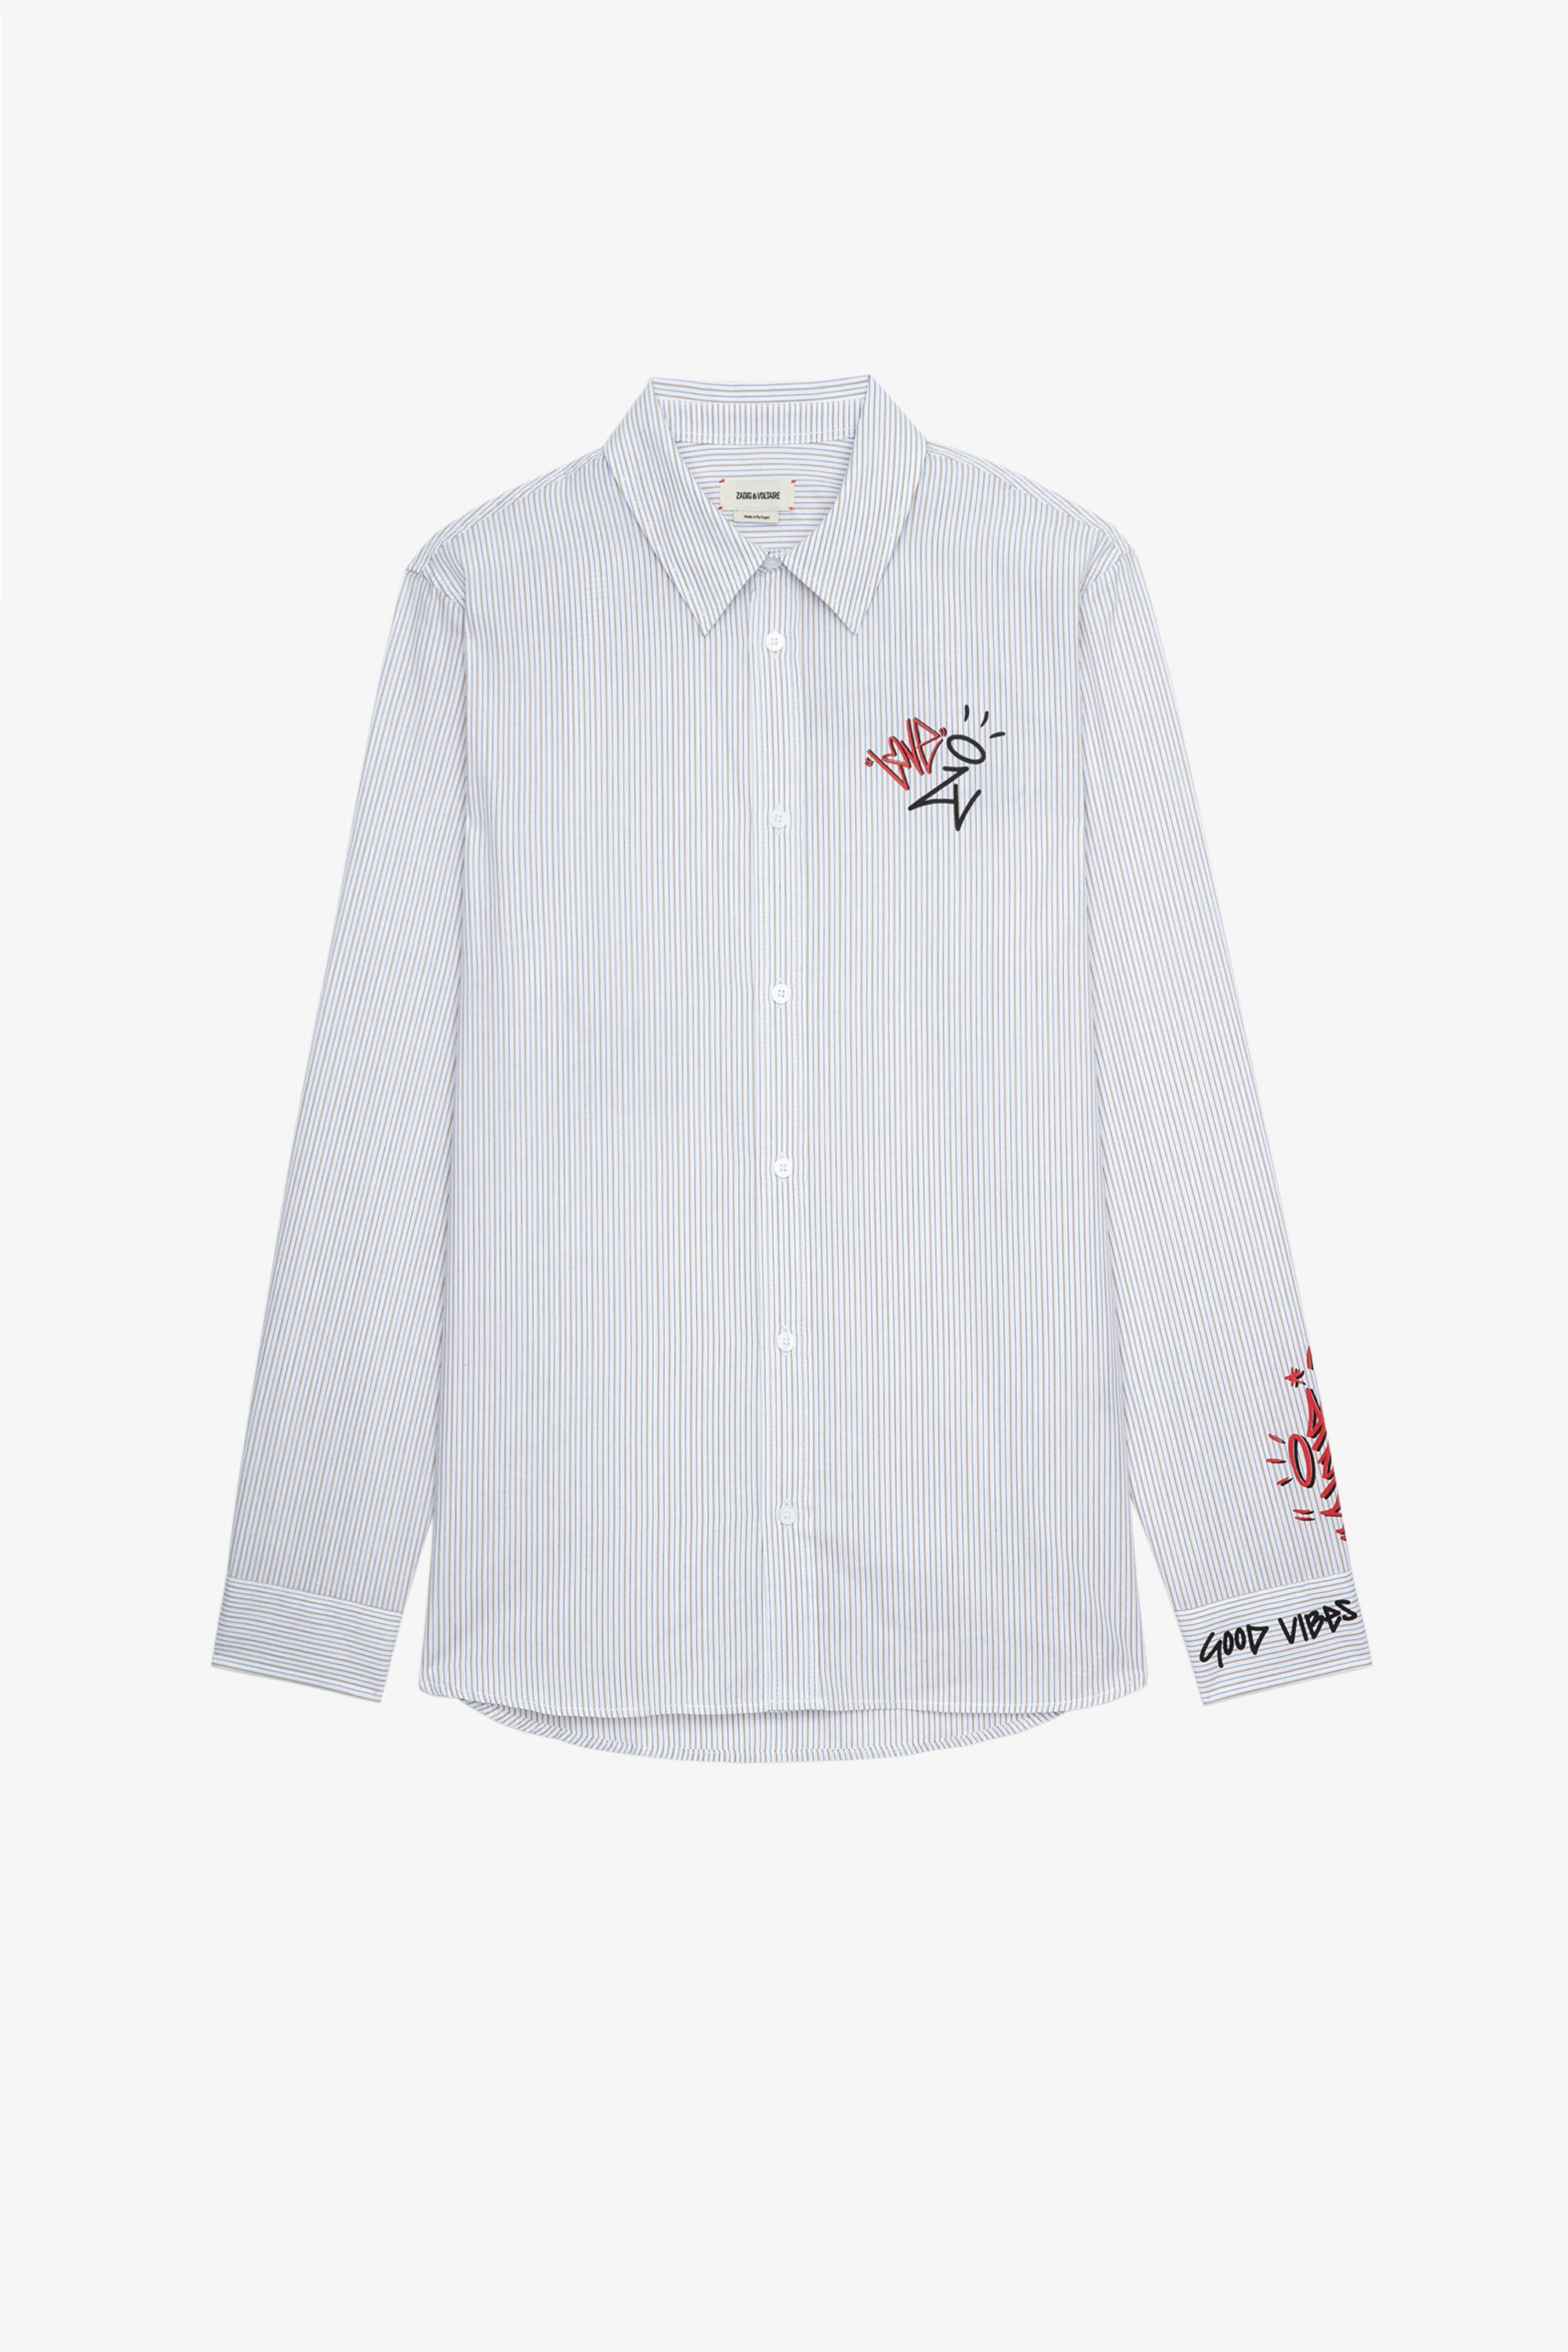 Jormi Stan Stripe Shirt Men’s Jormi light grey cotton shirt with stripes and motifs